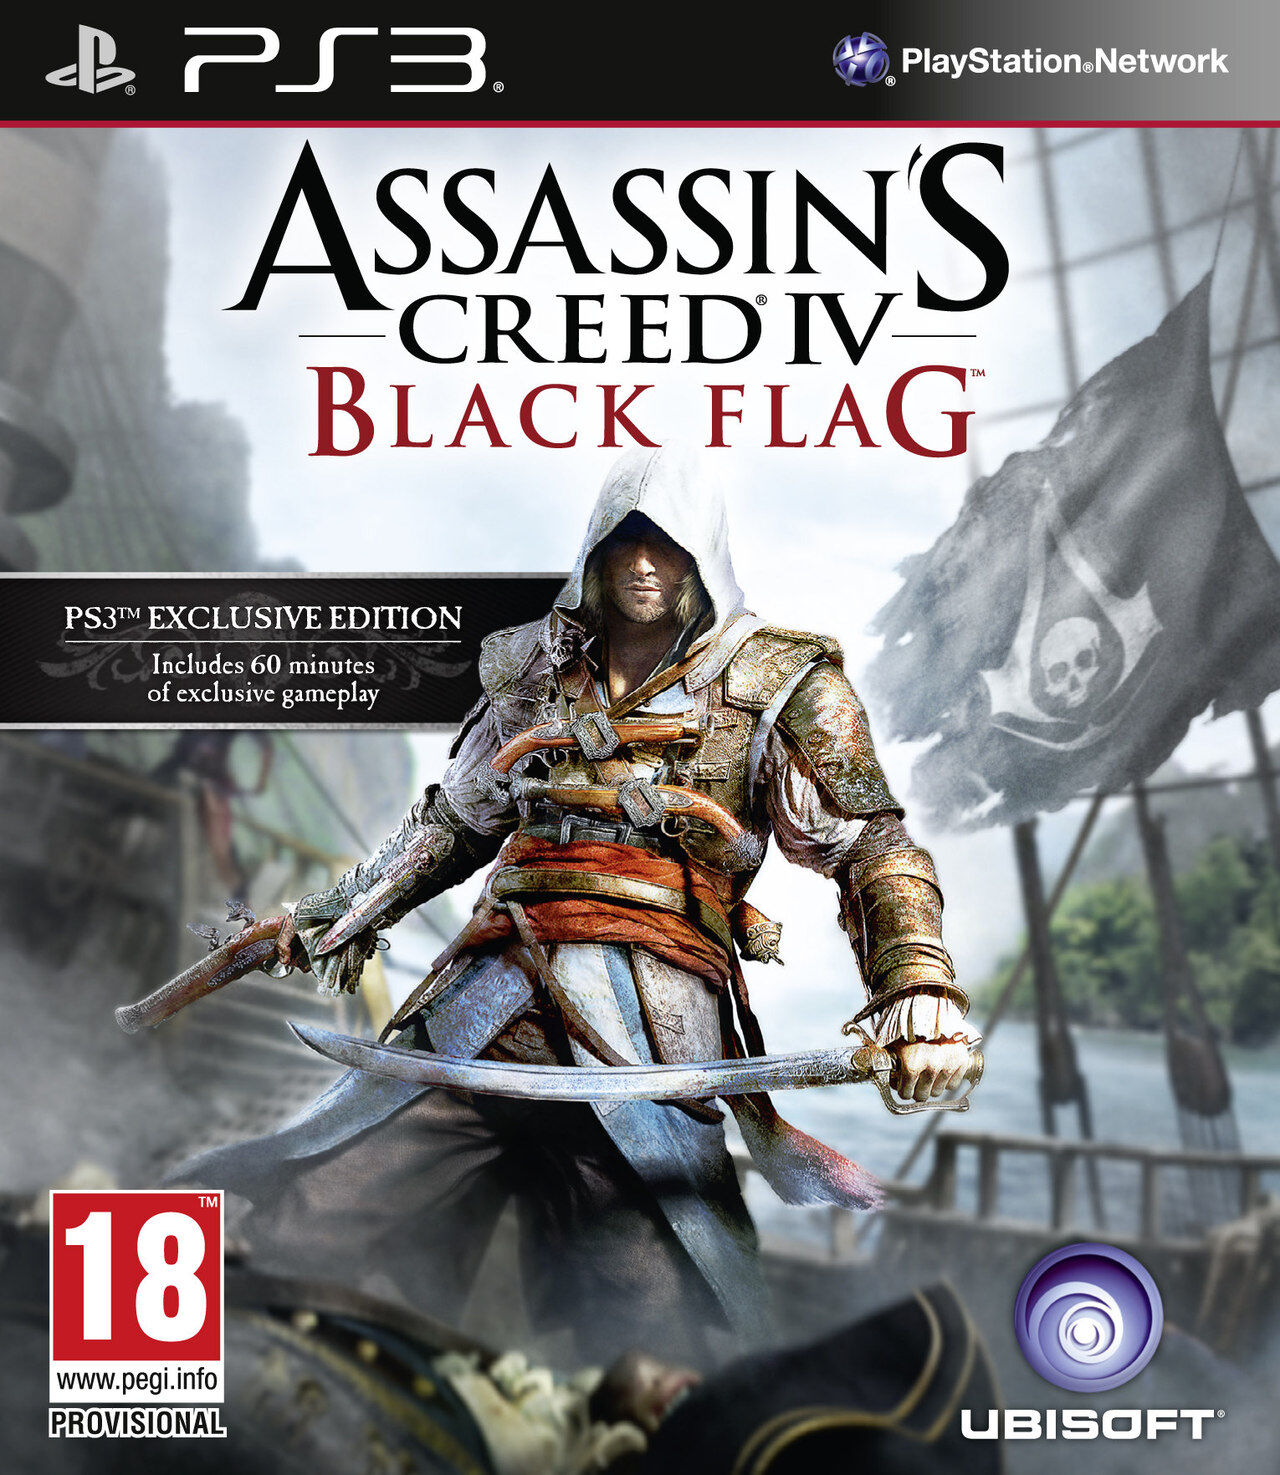 Assassin's Creed IV: Black Flag - PS3